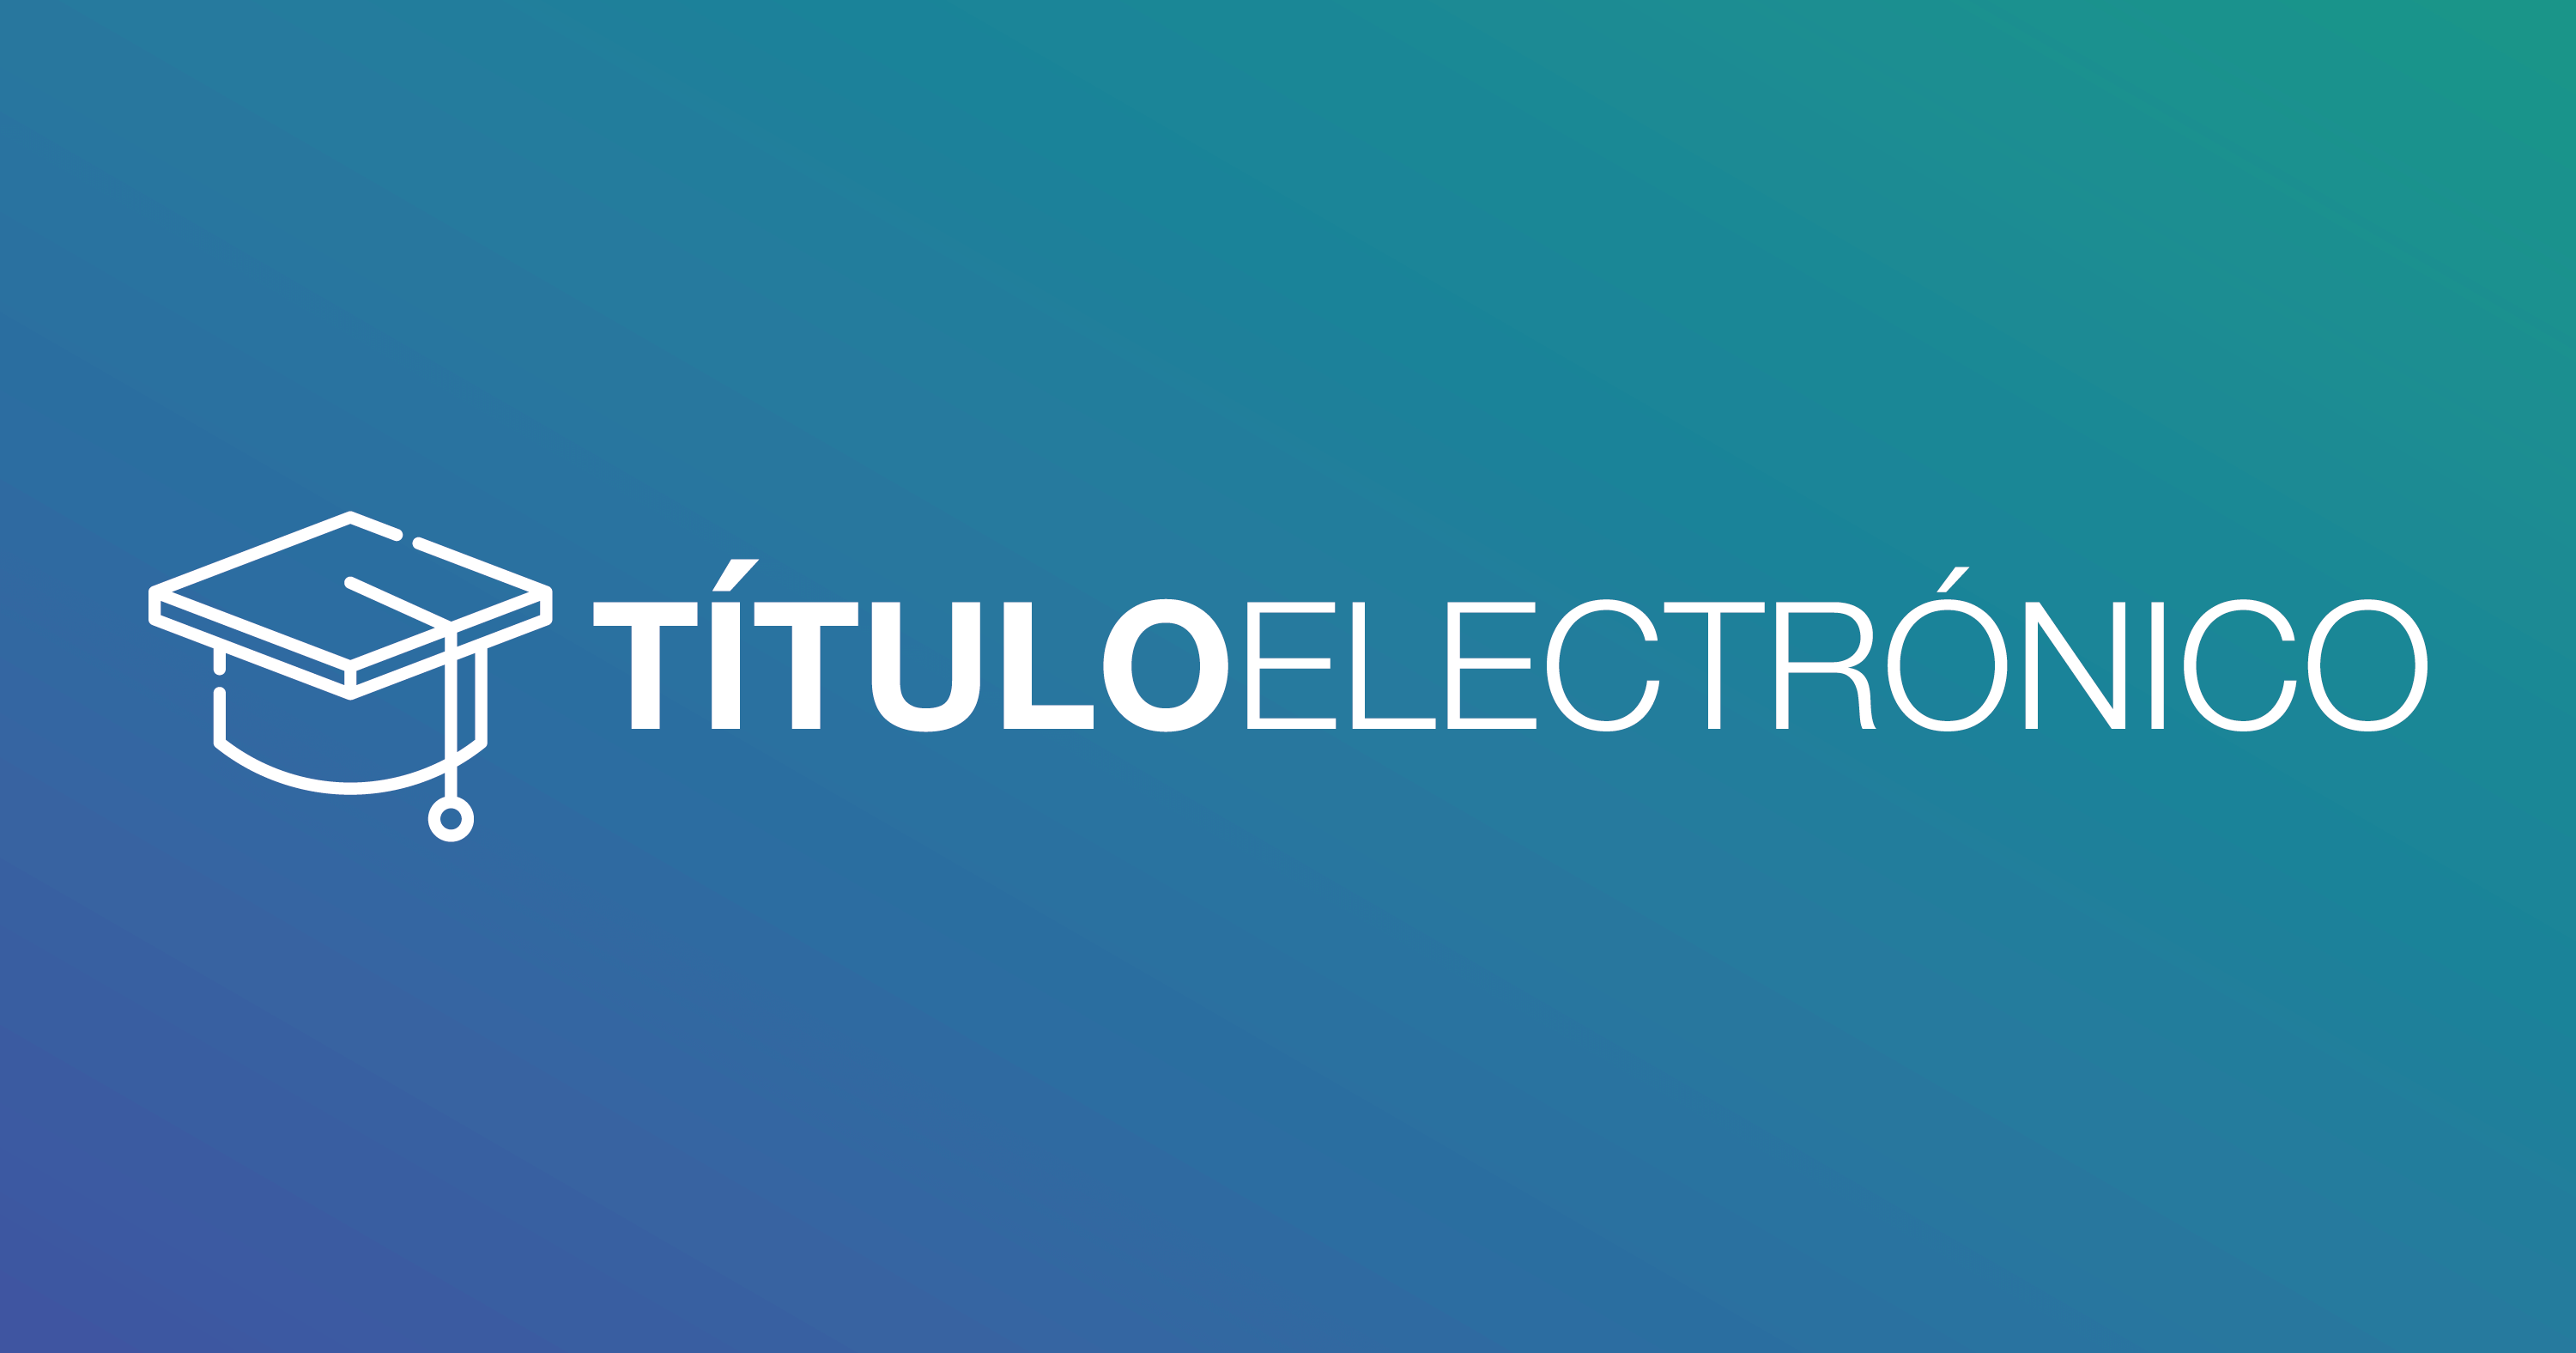 (c) Tituloelectronico.net